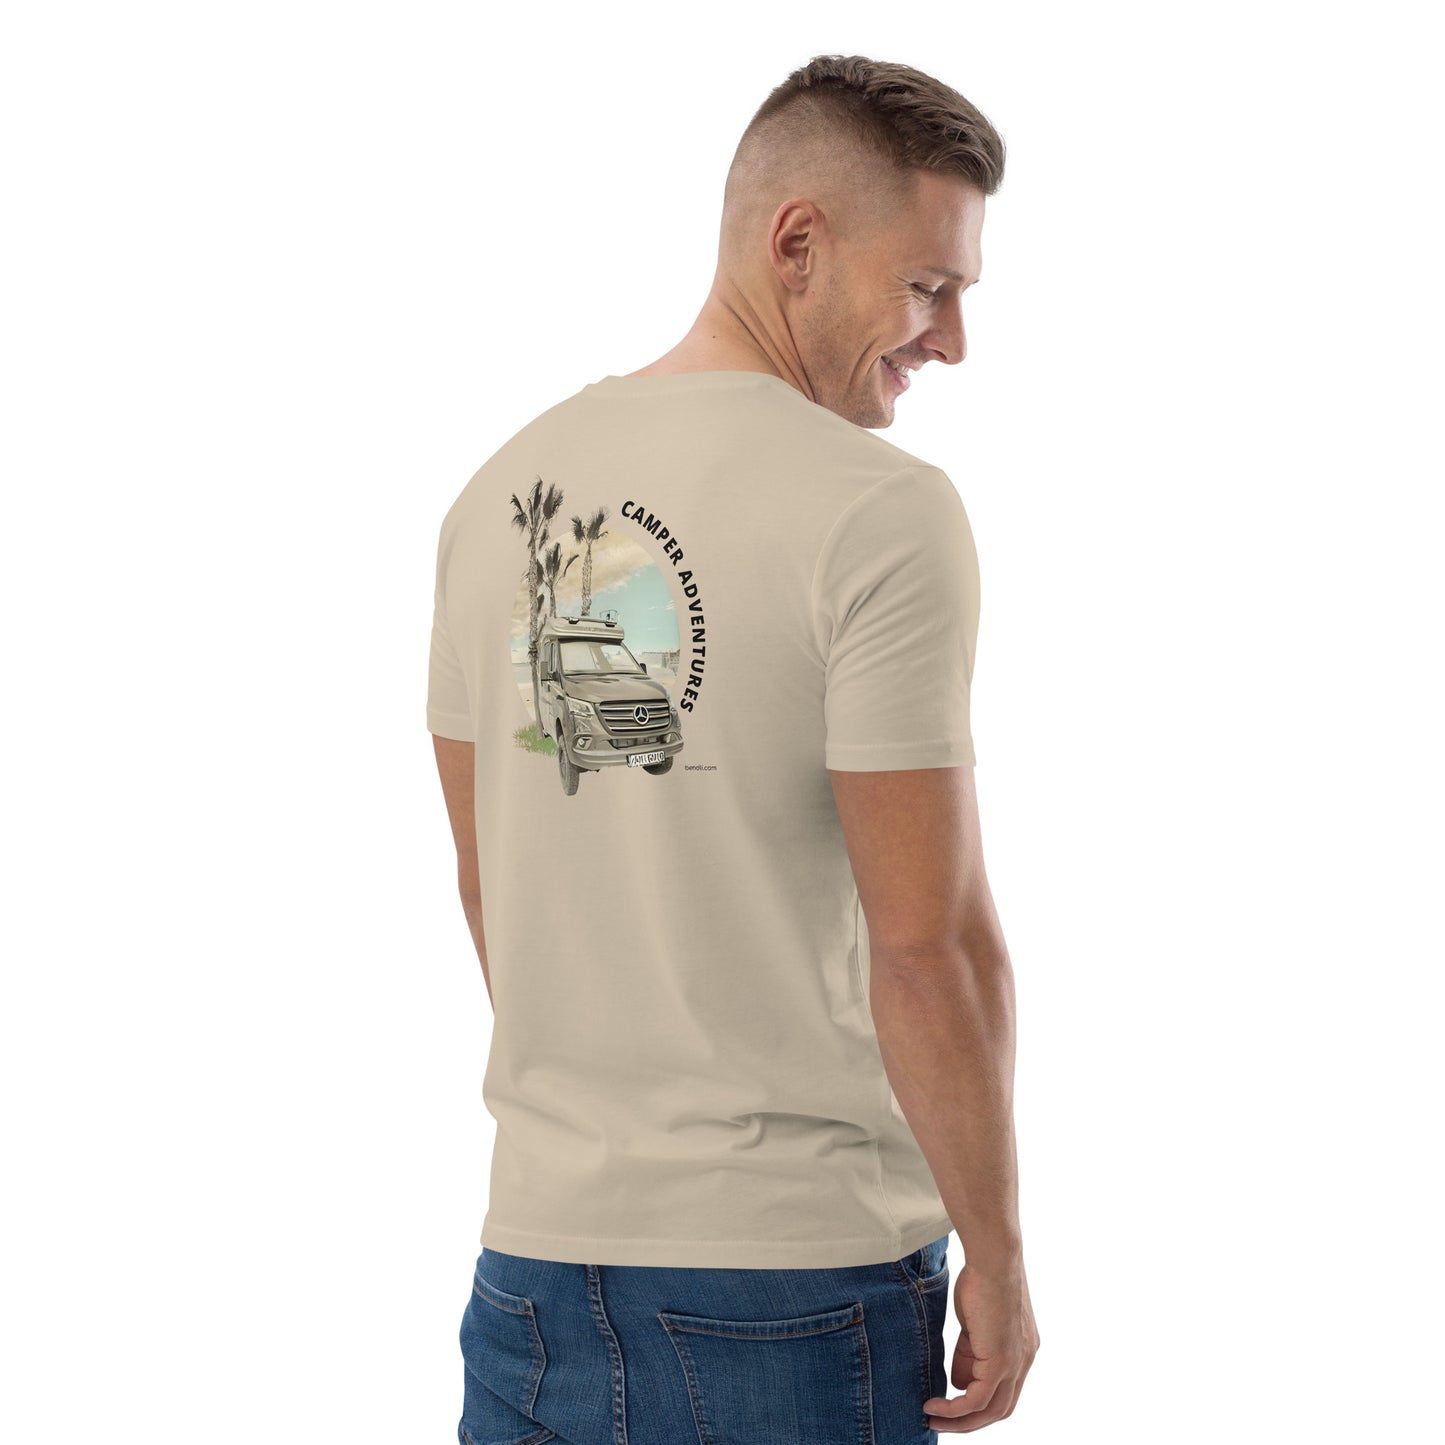 Camper adventures back Unisex organic cotton t-shirt